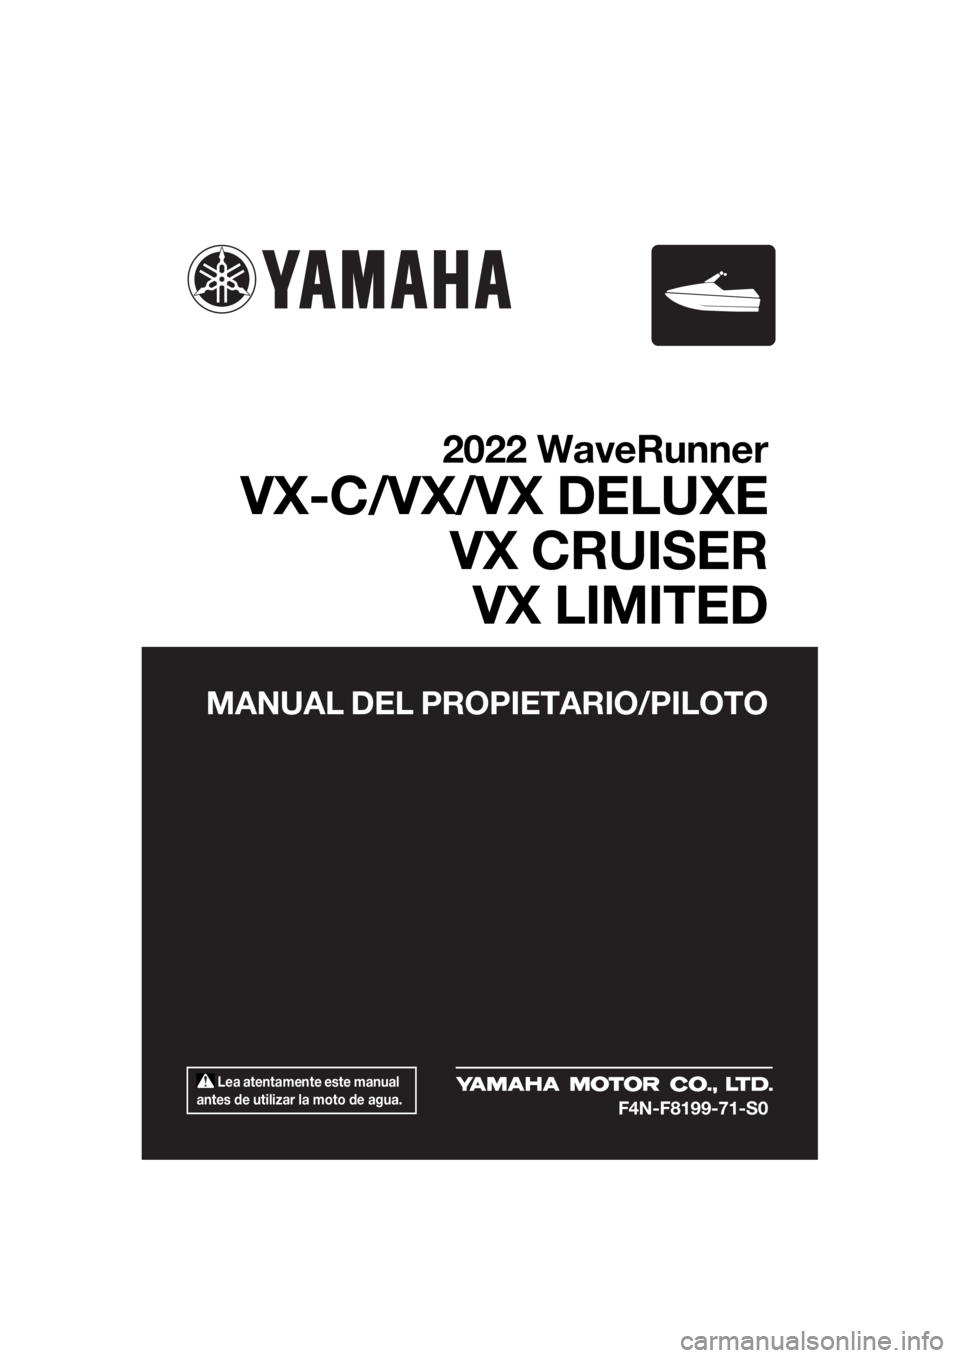 YAMAHA VX DELUXE 2022  Manuale de Empleo (in Spanish) 